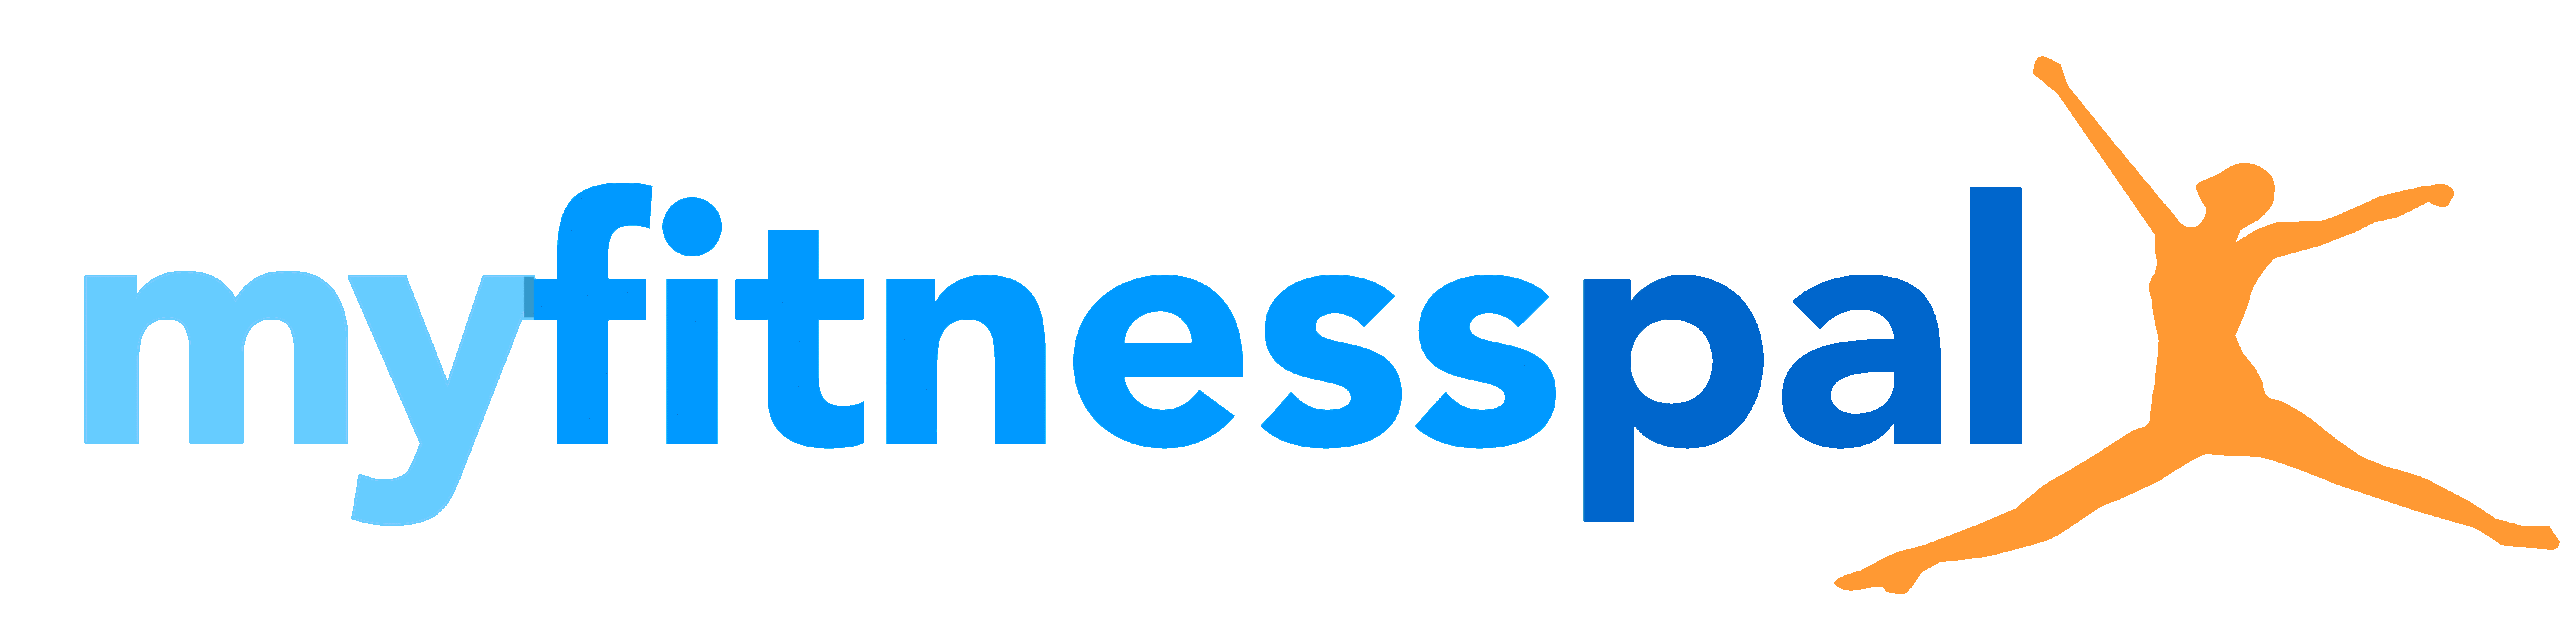 Myfitnesspal-logo_un4bsb